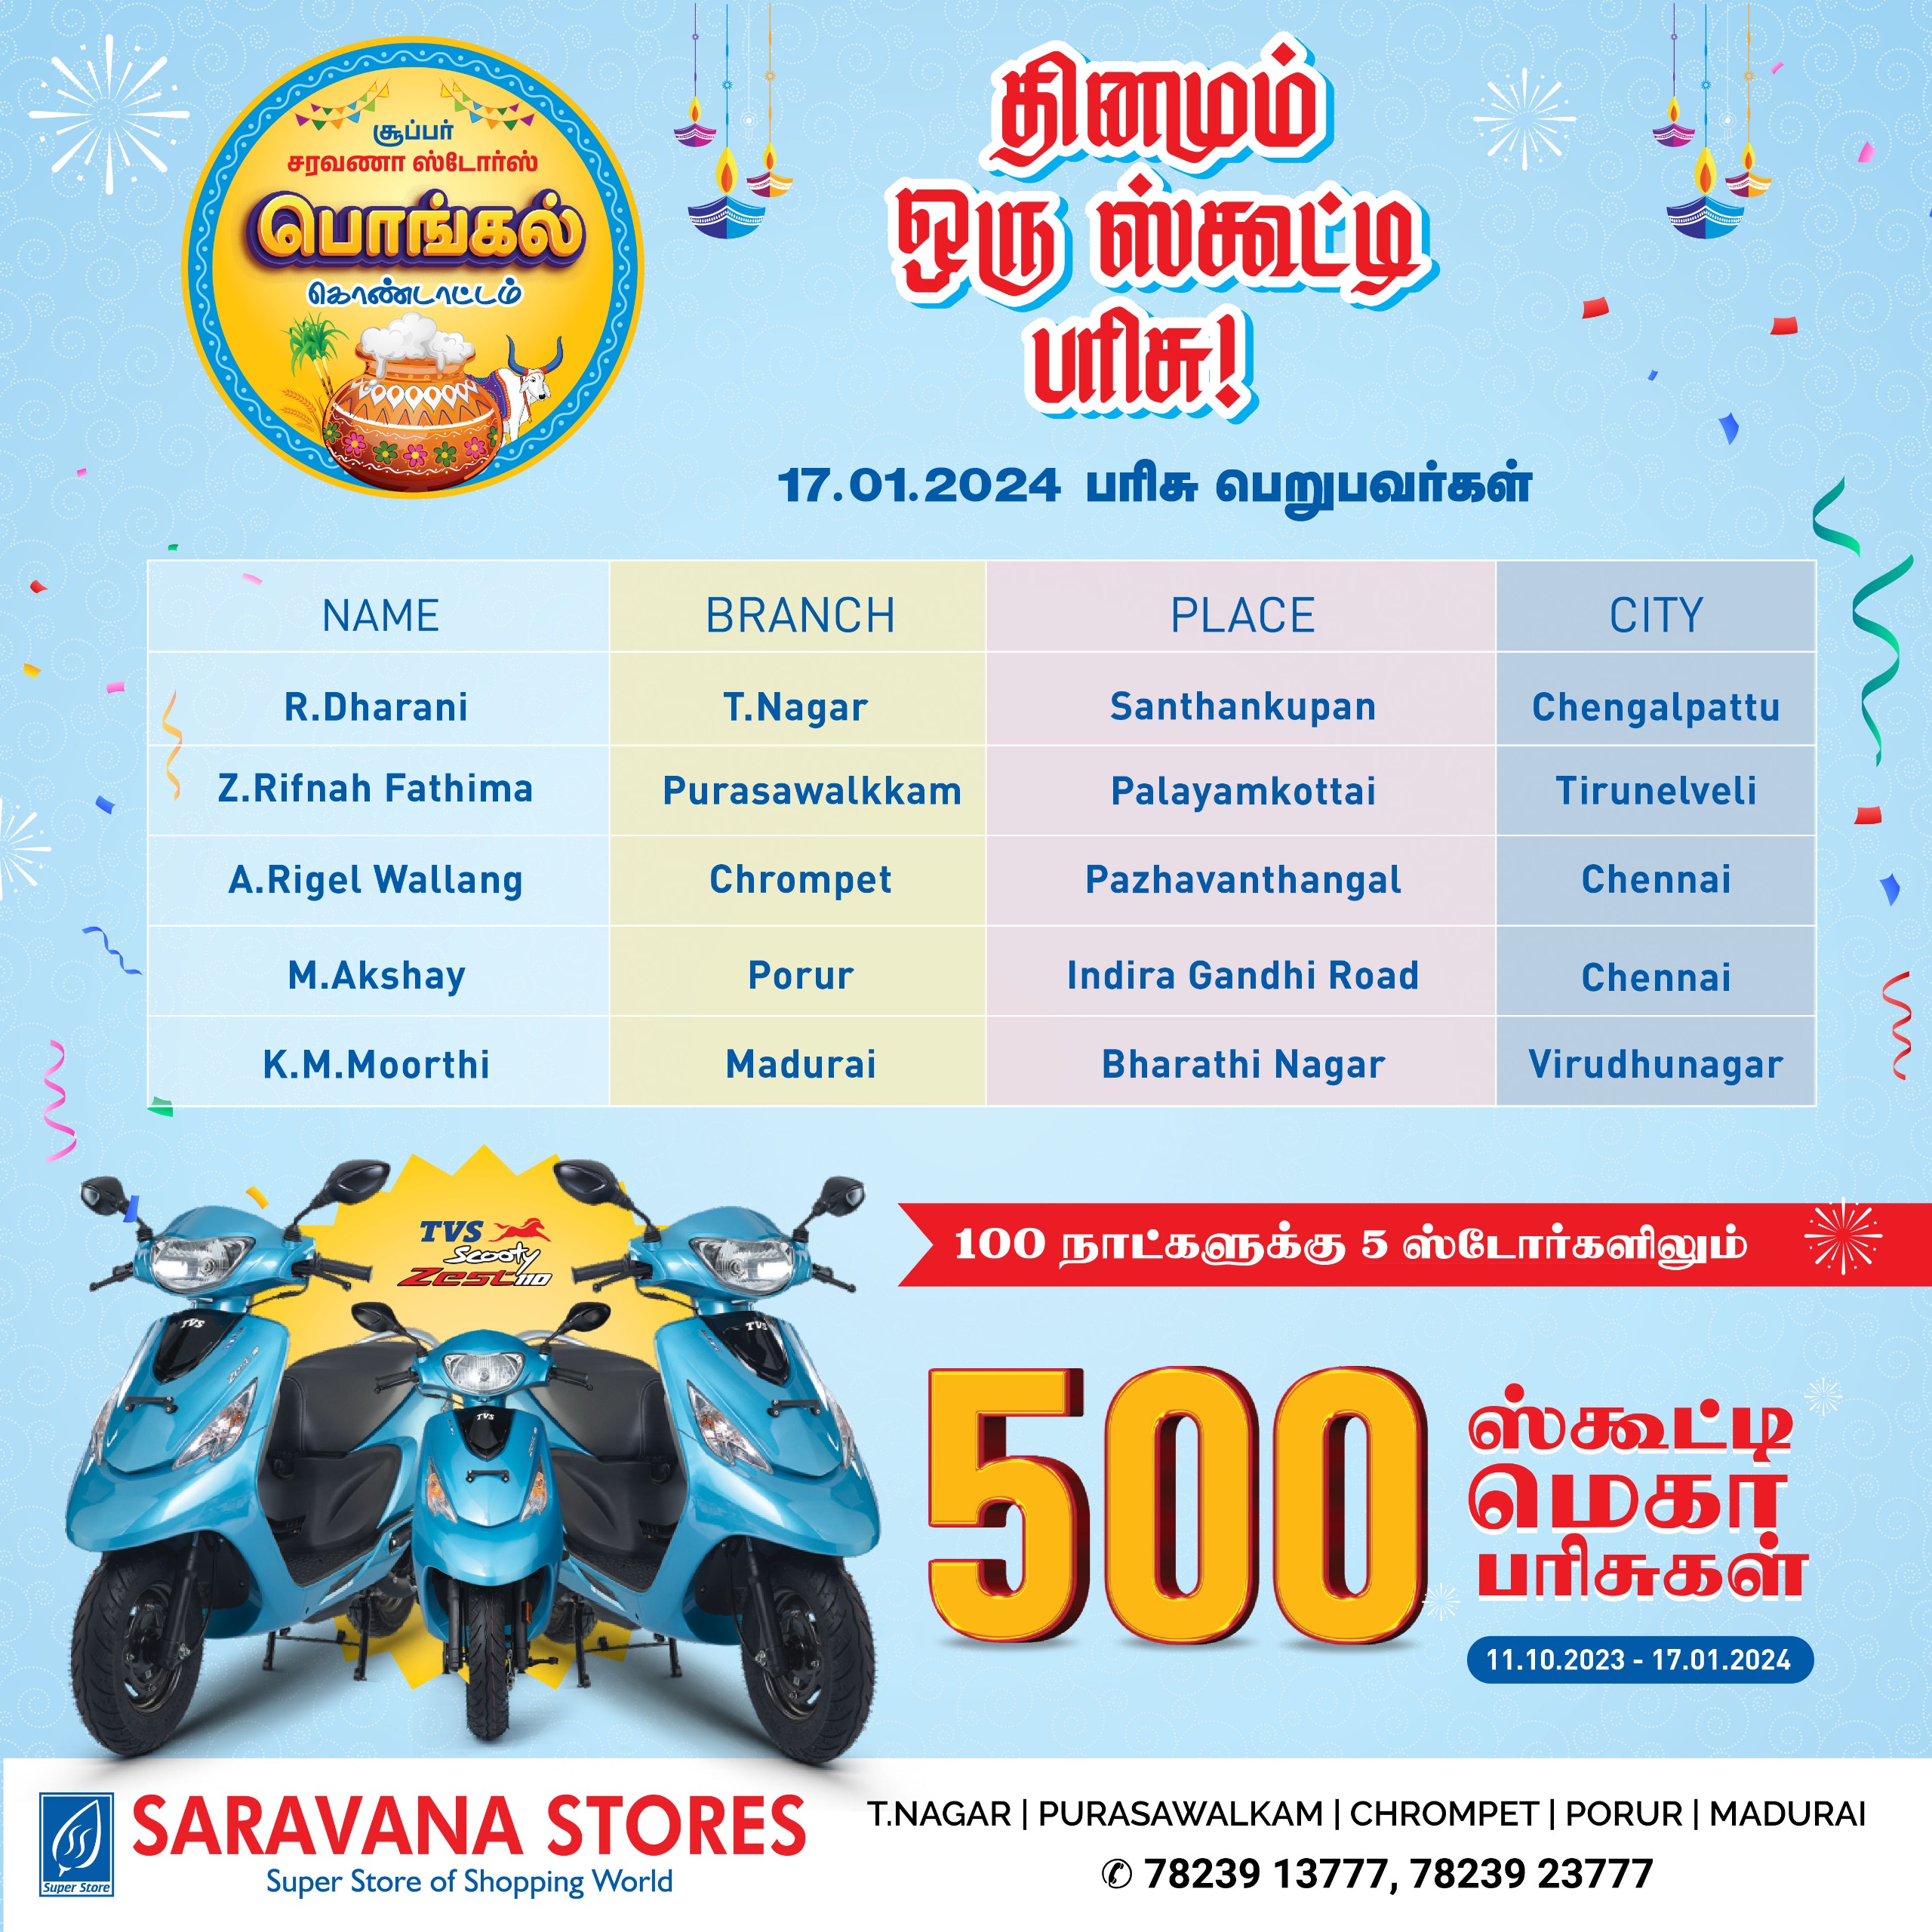 Super Saravana Stores (@saravanastorein) / X